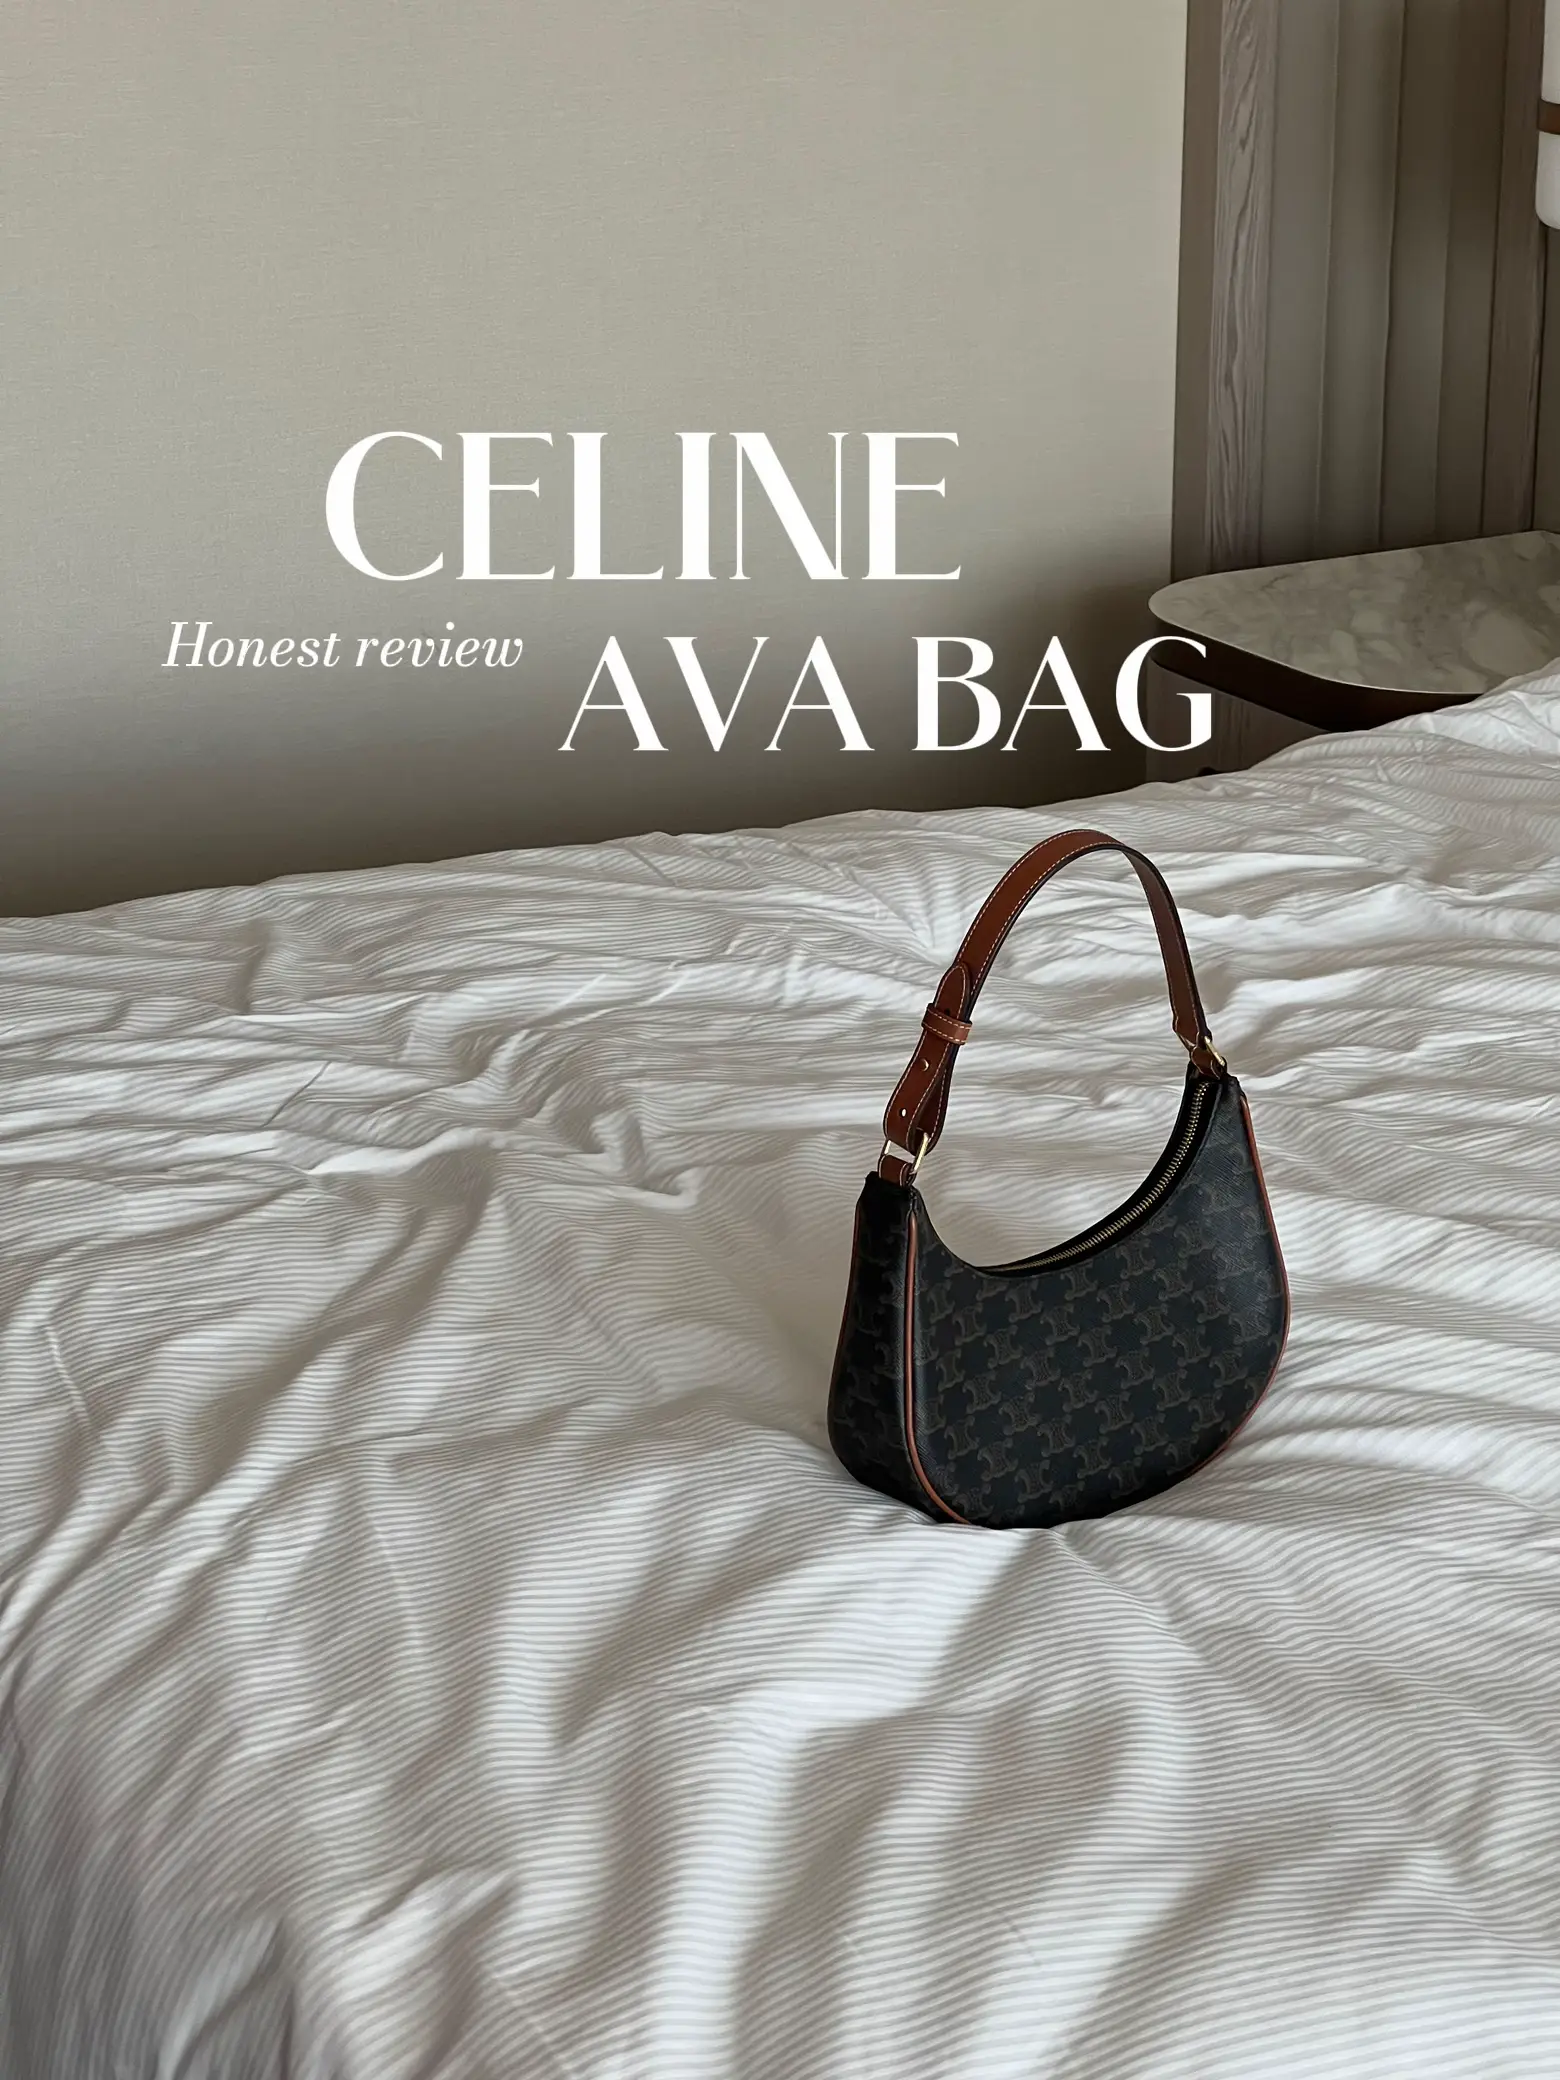 CELINE AVA BAG Review, New Version